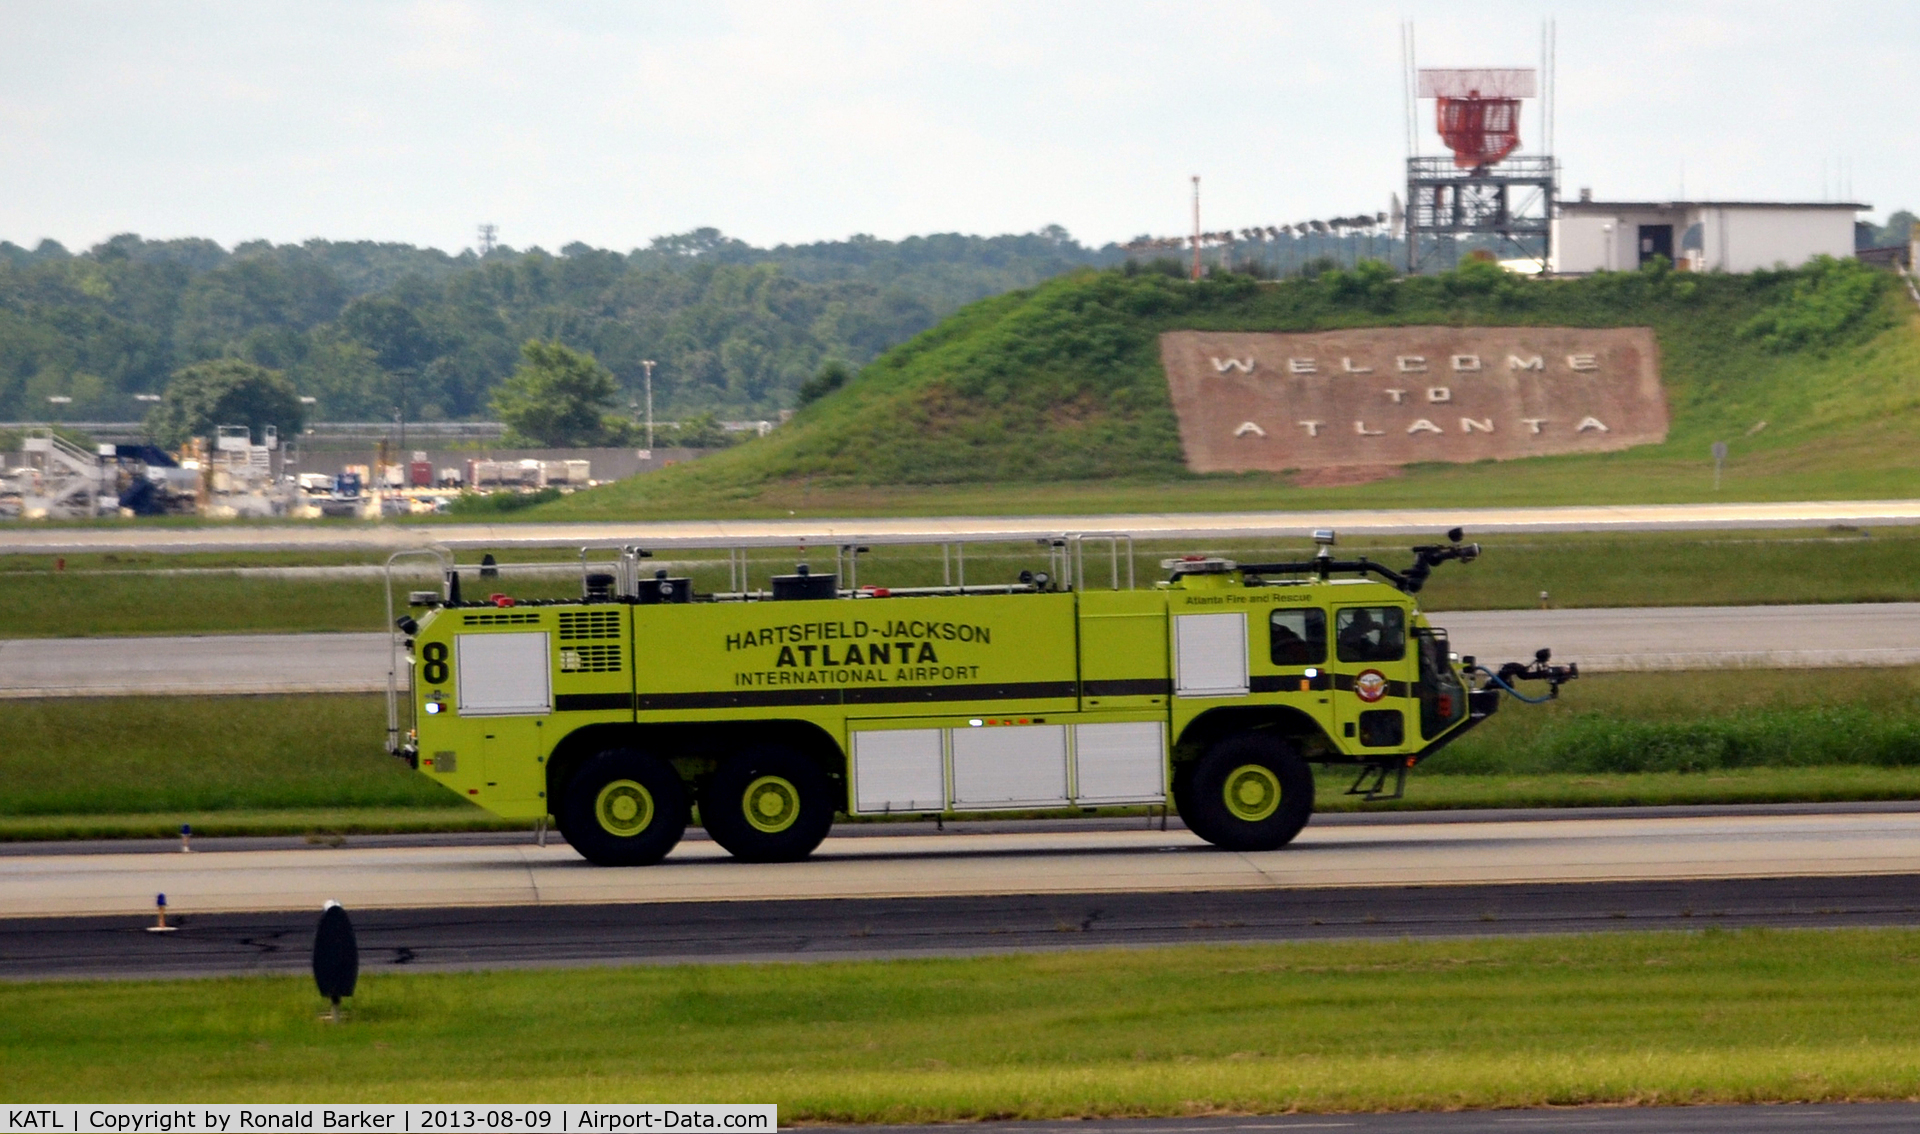 Hartsfield - Jackson Atlanta International Airport (ATL) - Fire truck number 8